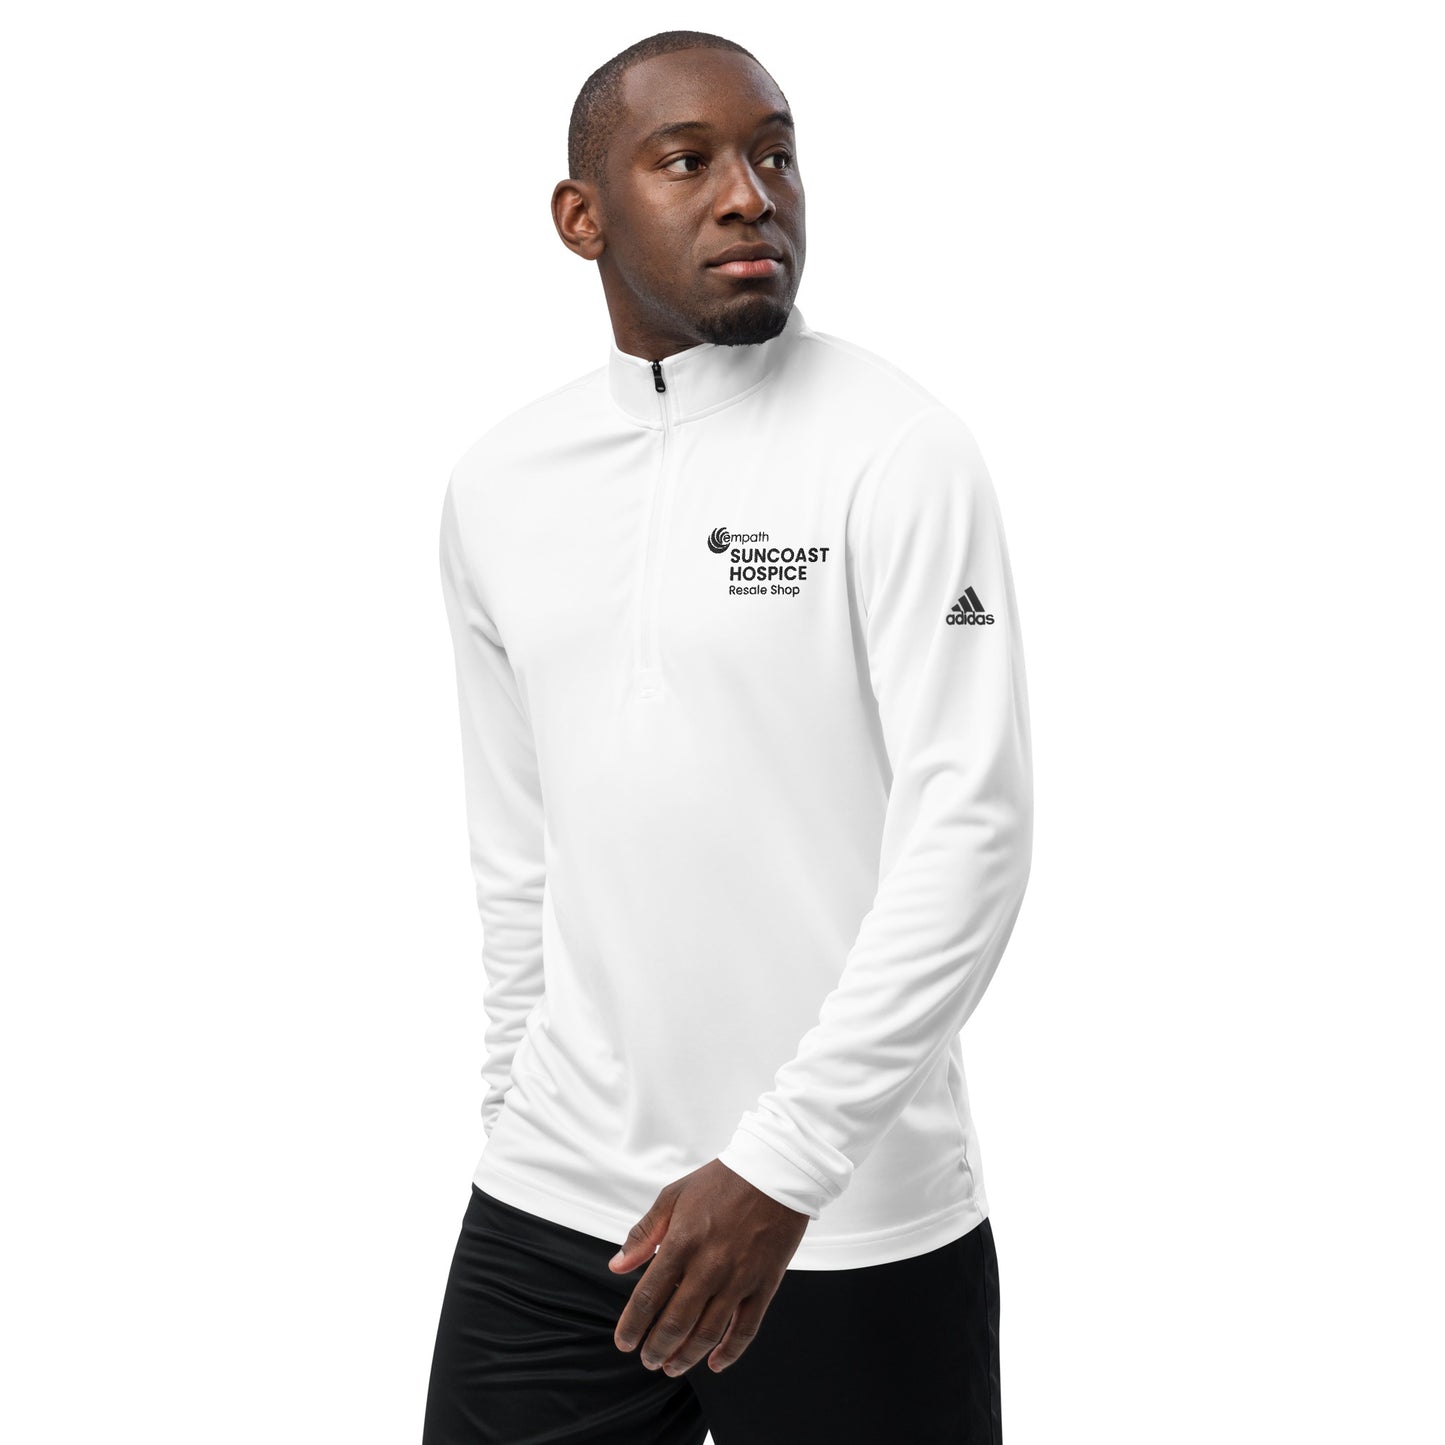 Adidas | Men's Quarter Zip Pullover - Suncoast Hospice Resale Shop